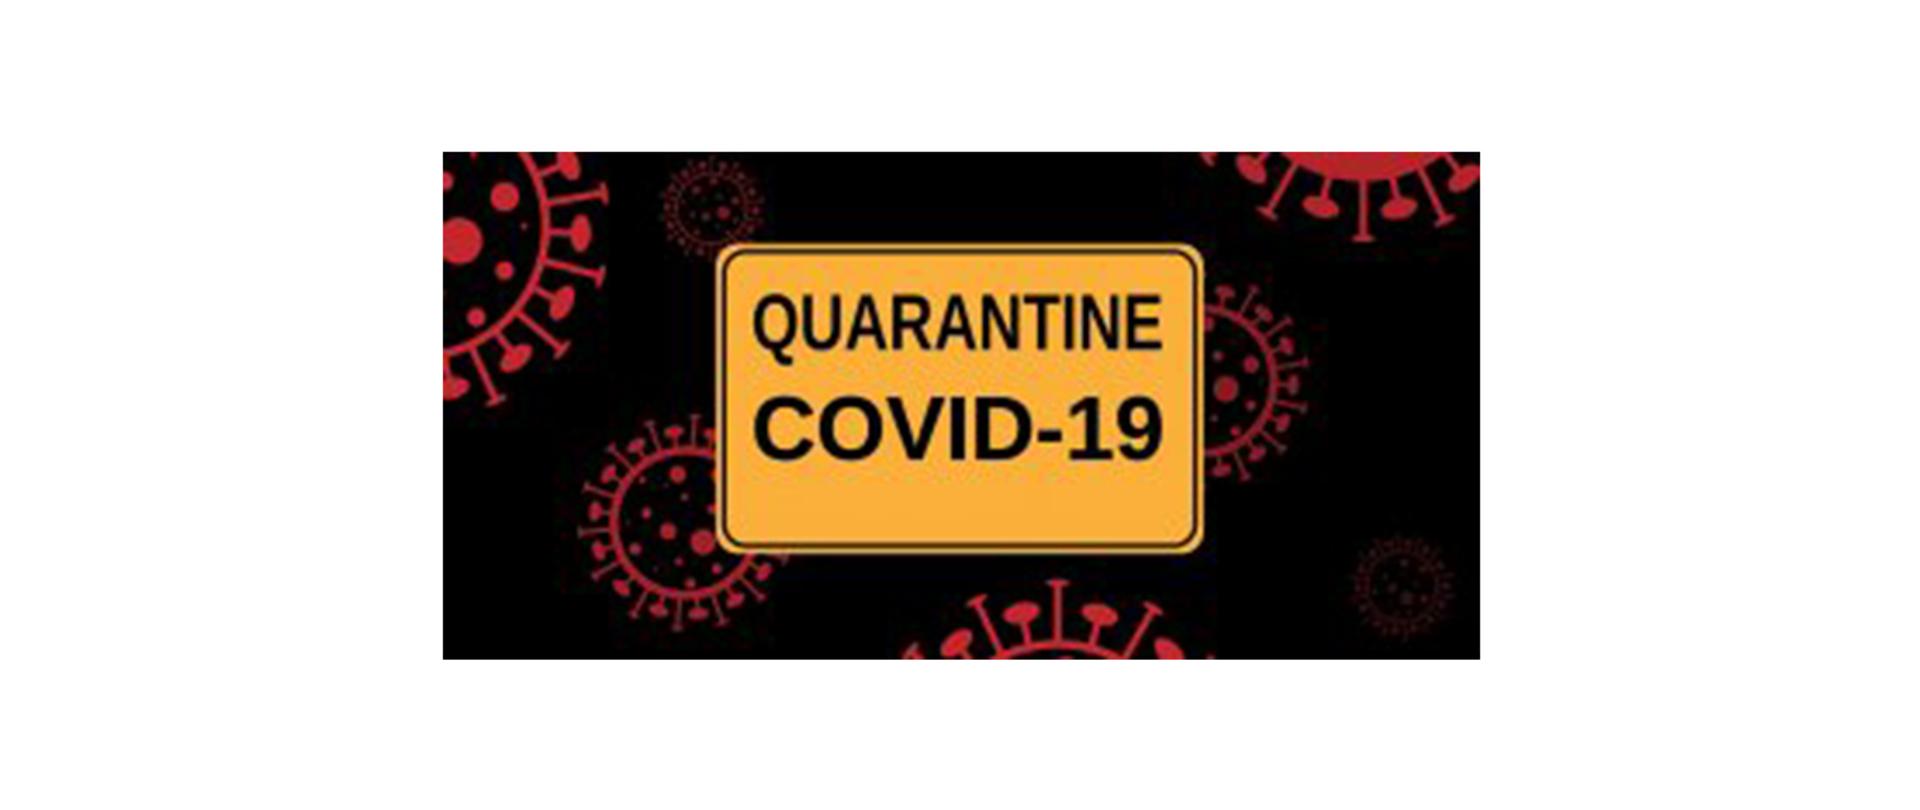 Grafika poglądowa: napis "QUARANTINE COVID-19"